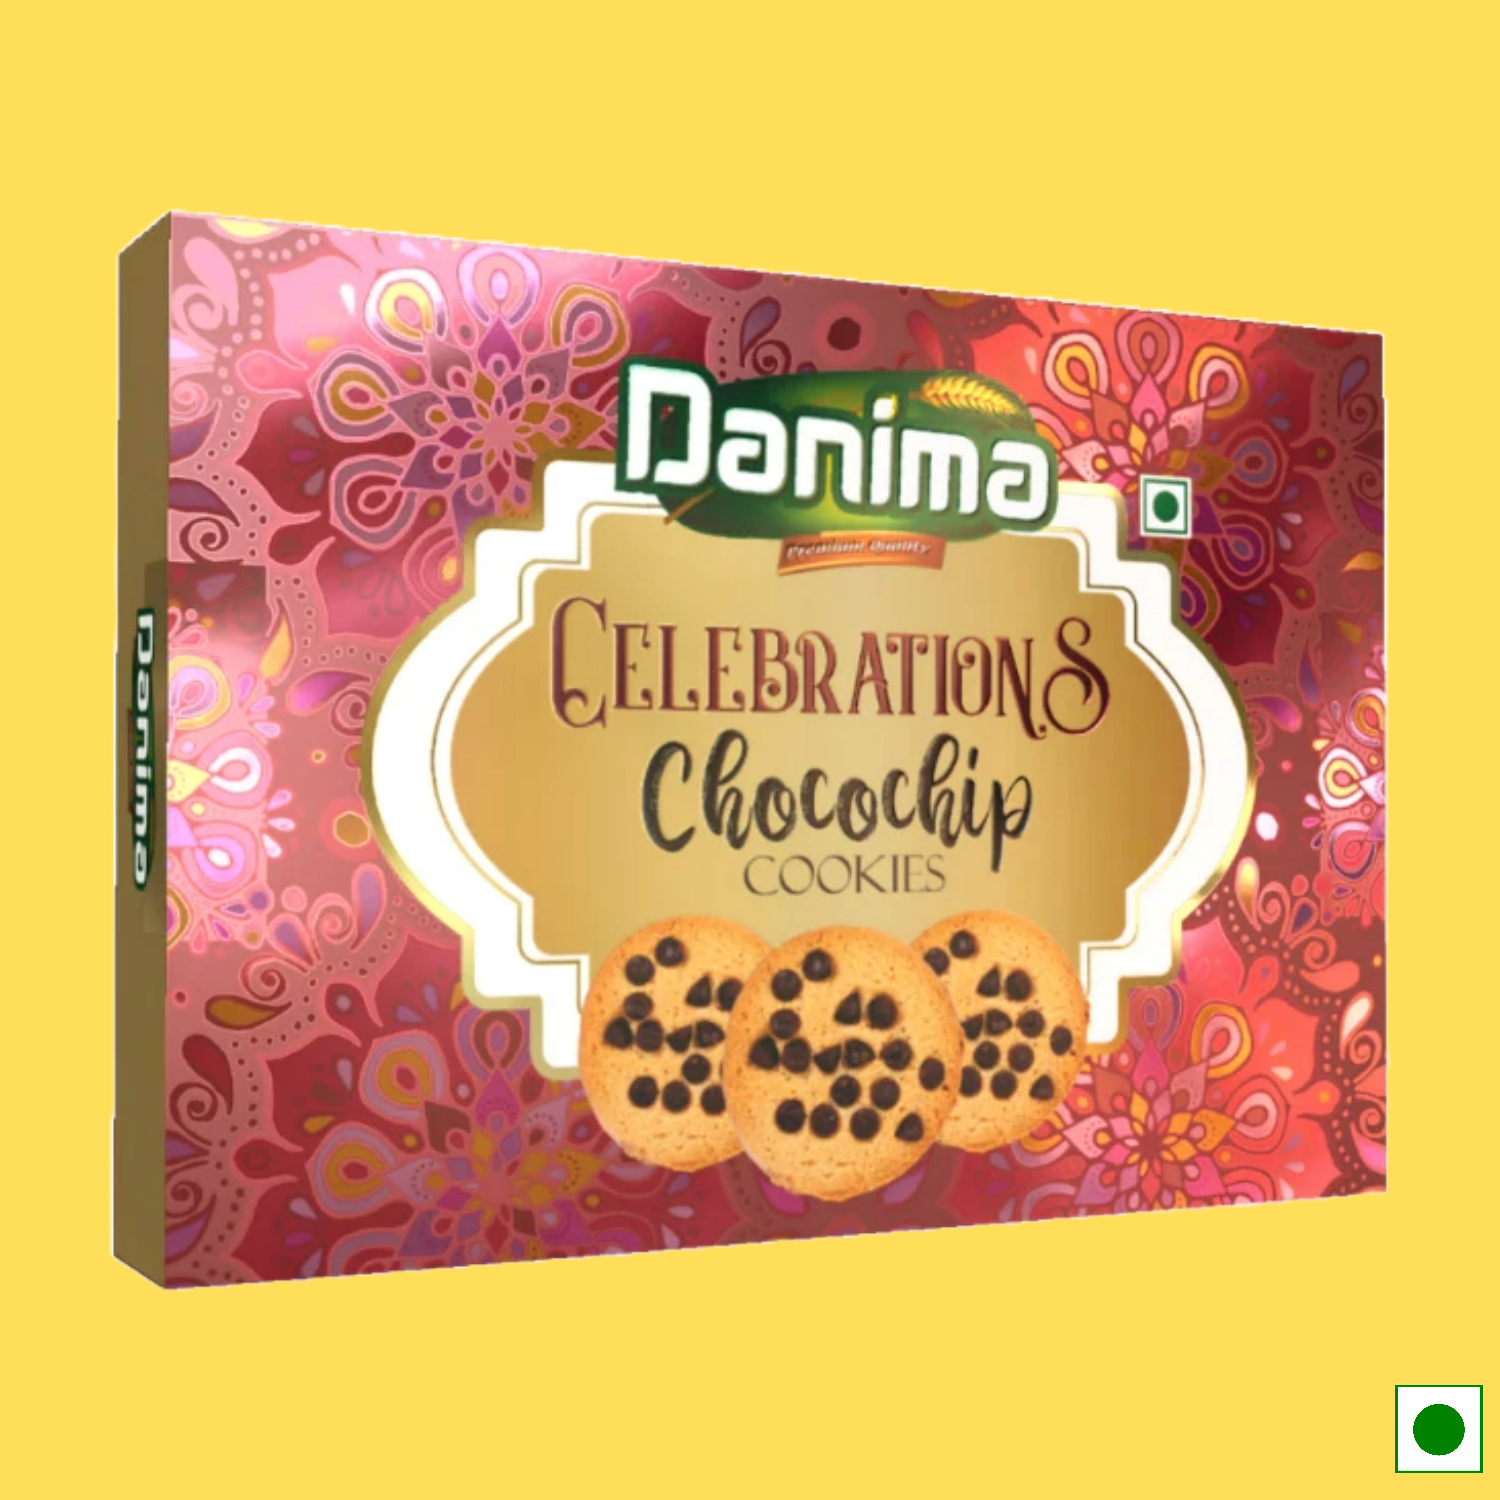 Danima Celebration Chocochip Cookies, 300g